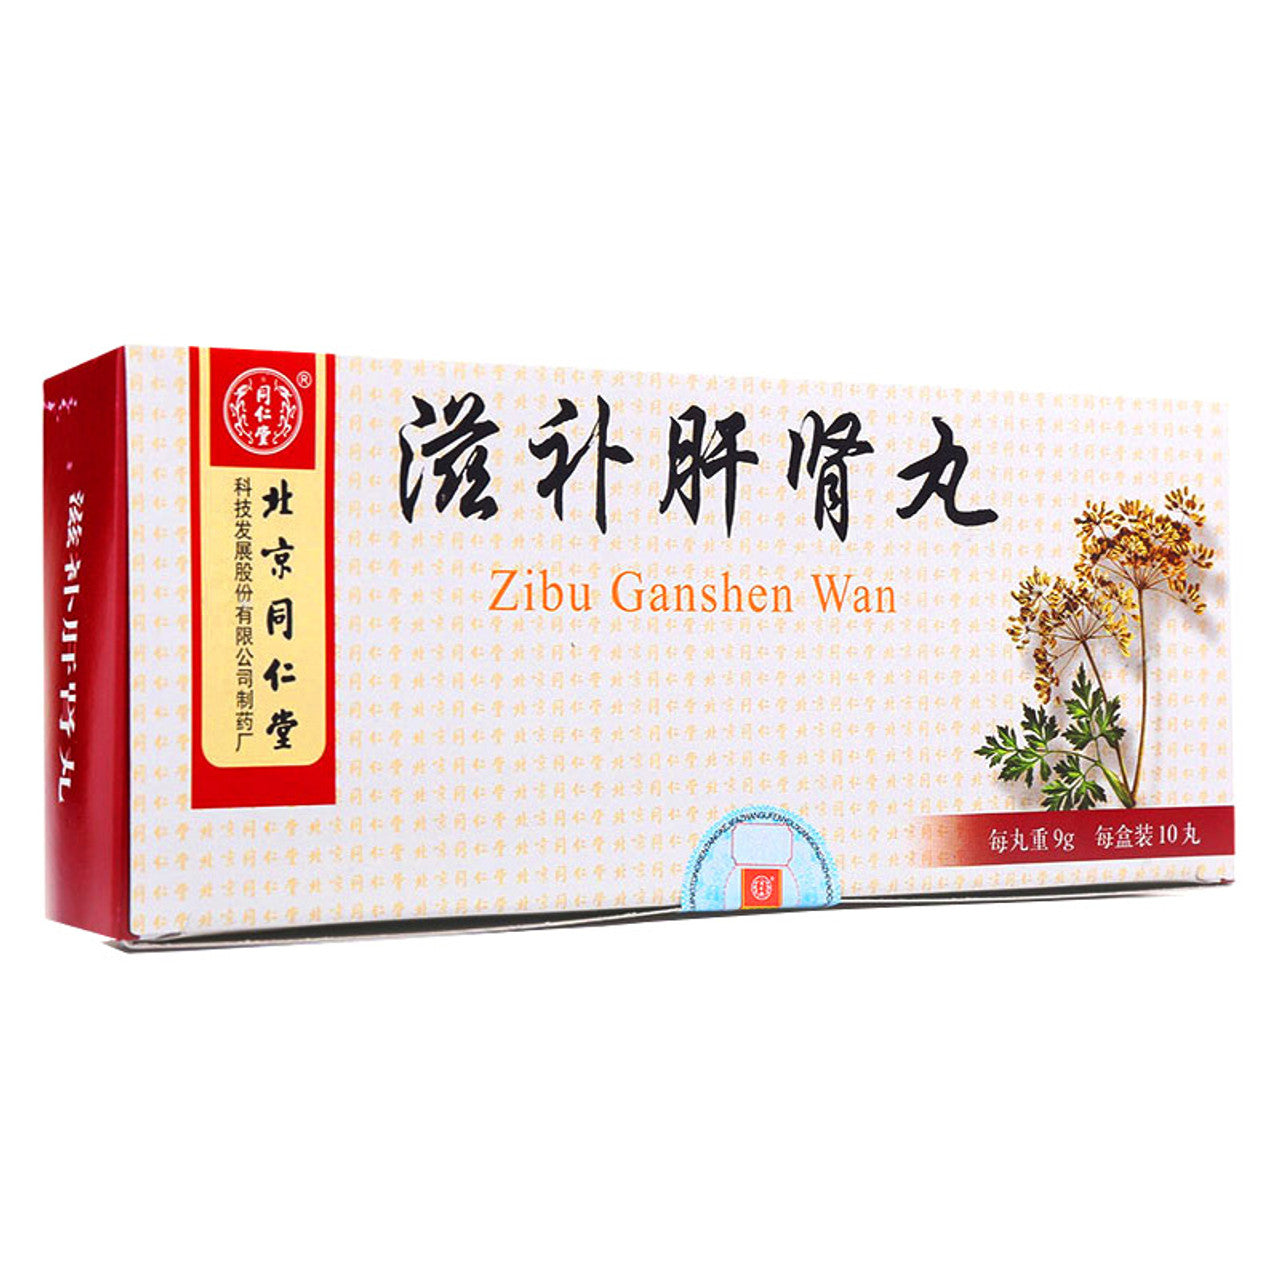 China Herb. Zibu Ganshen Wan or Zibu Ganshen Pills or Nourishing Liver and Kidney Pills For chronic hepatitis and chronic nephritis with Yin deficiency syndrome.